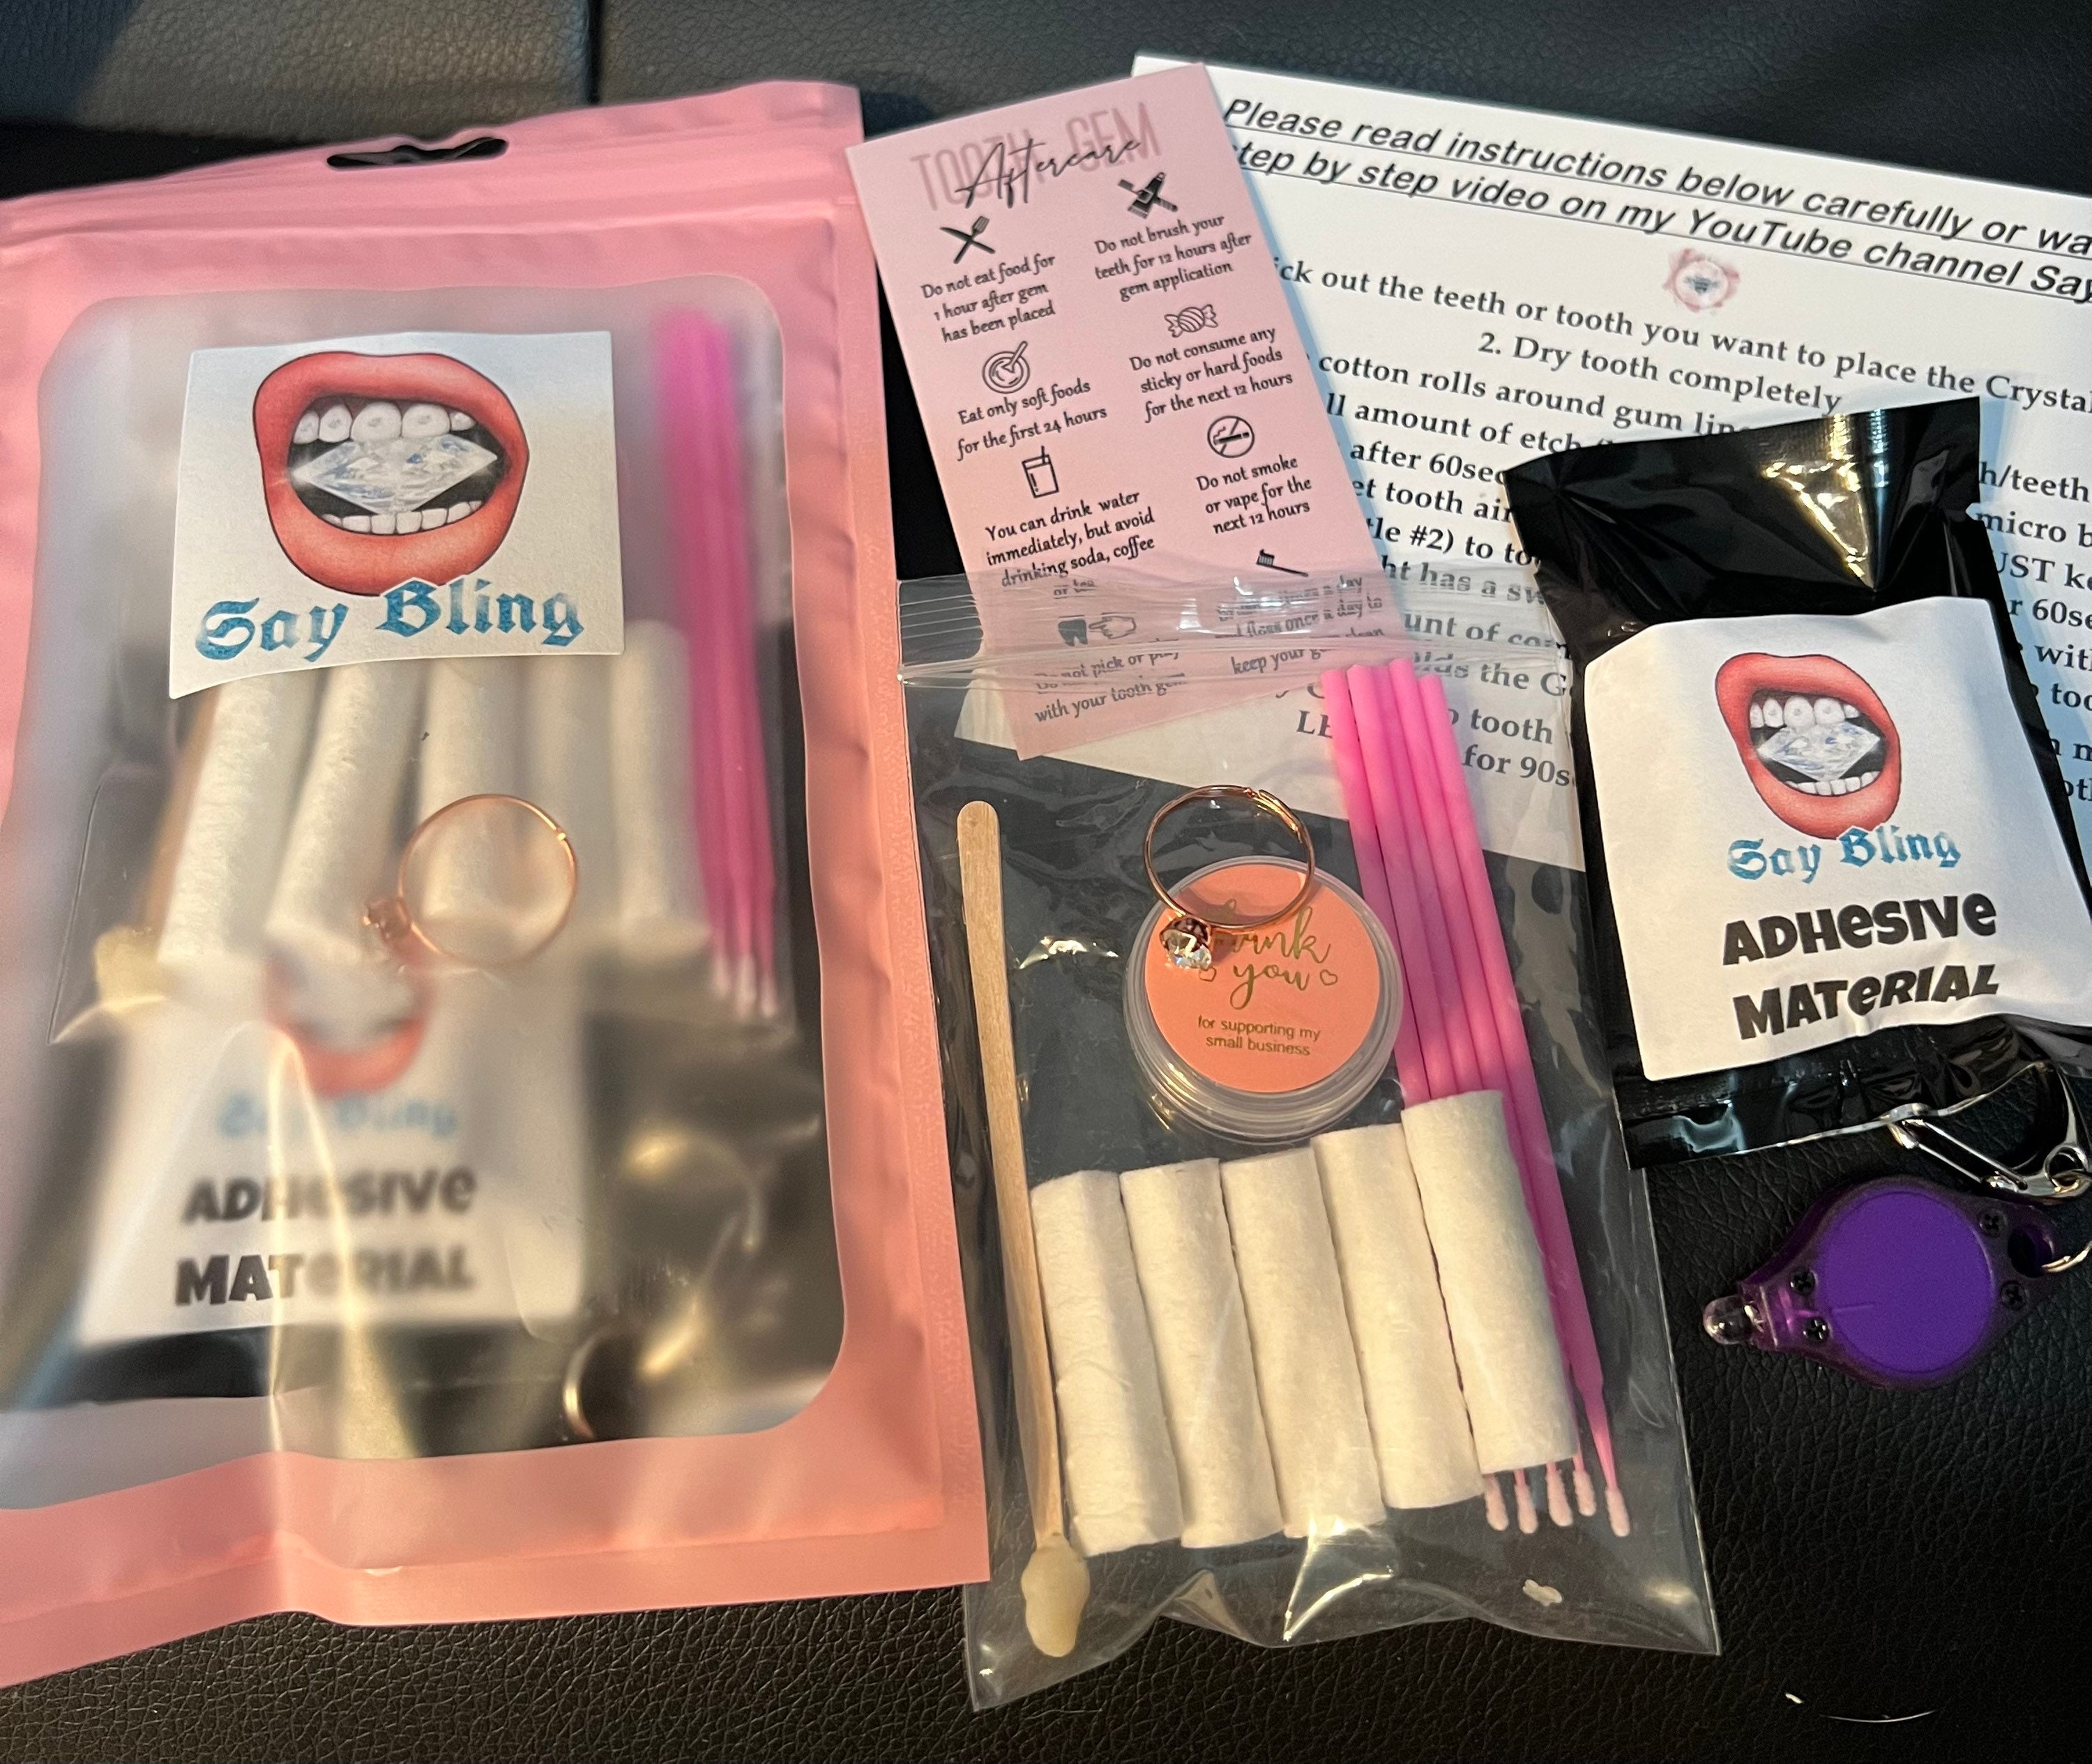 Tooth Gem Application Kits